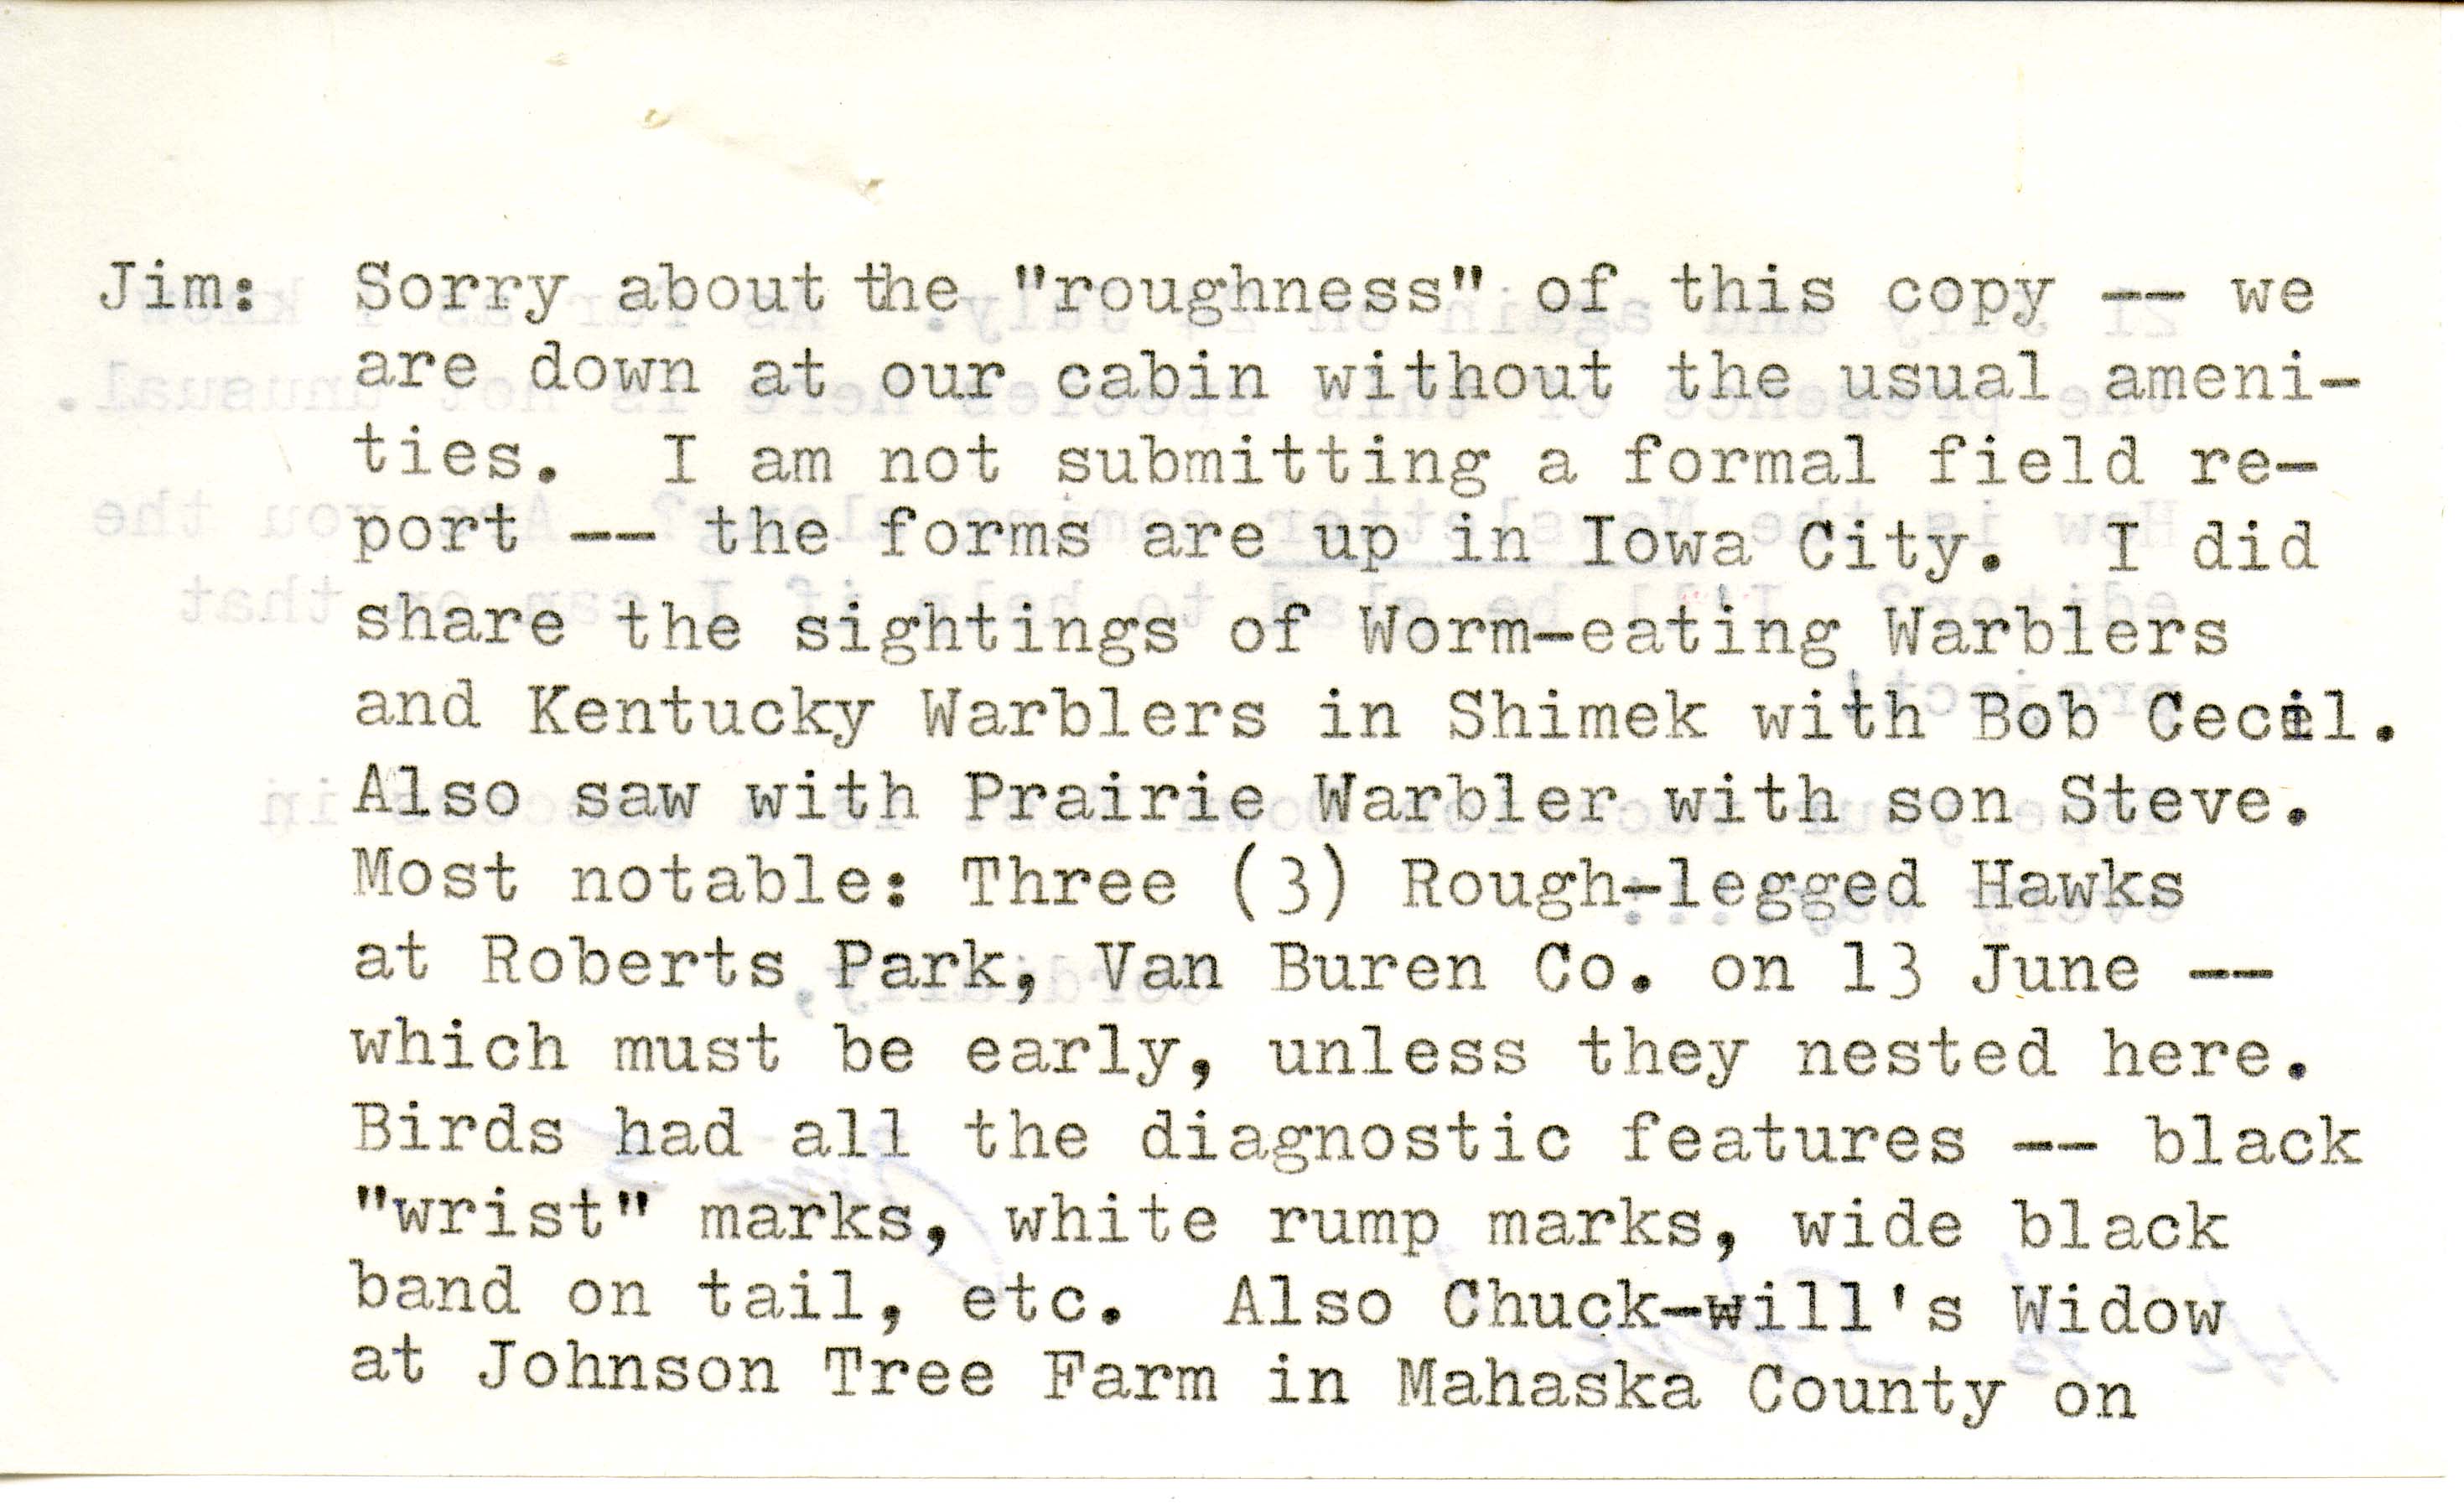 James P. Sandrock letter to James J. Dinsmore regarding bird sightings, summer 1985